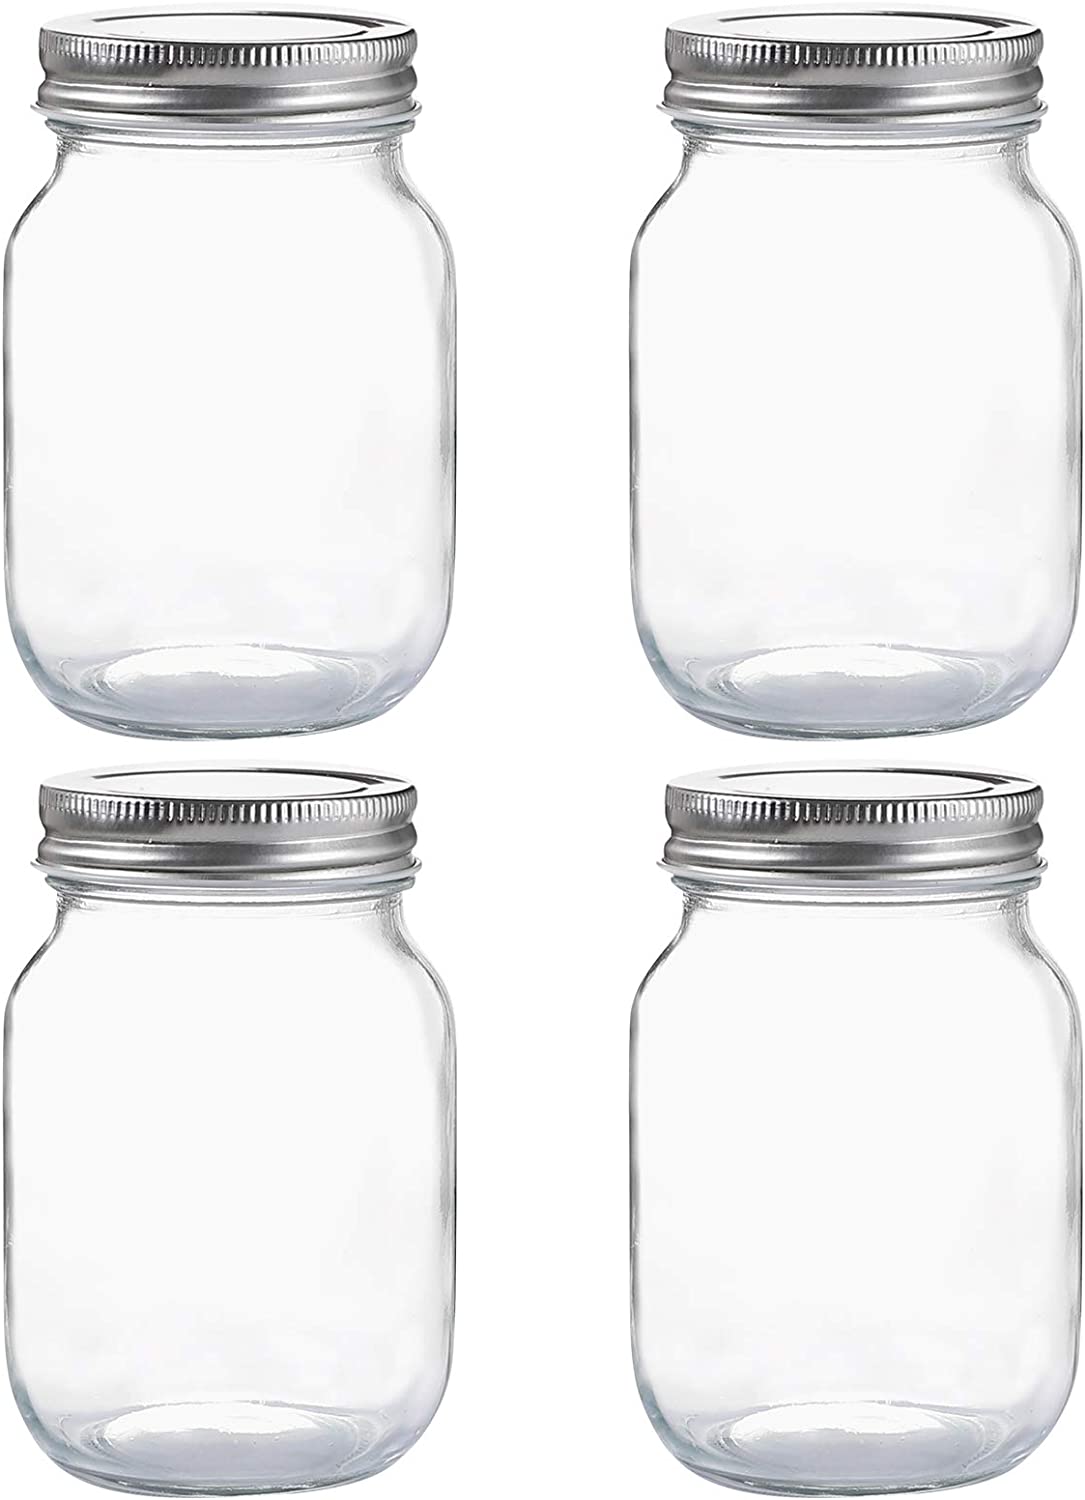 YINGERHUAN Multi-Purpose Clear Glass Mason Jars, 4-Piece